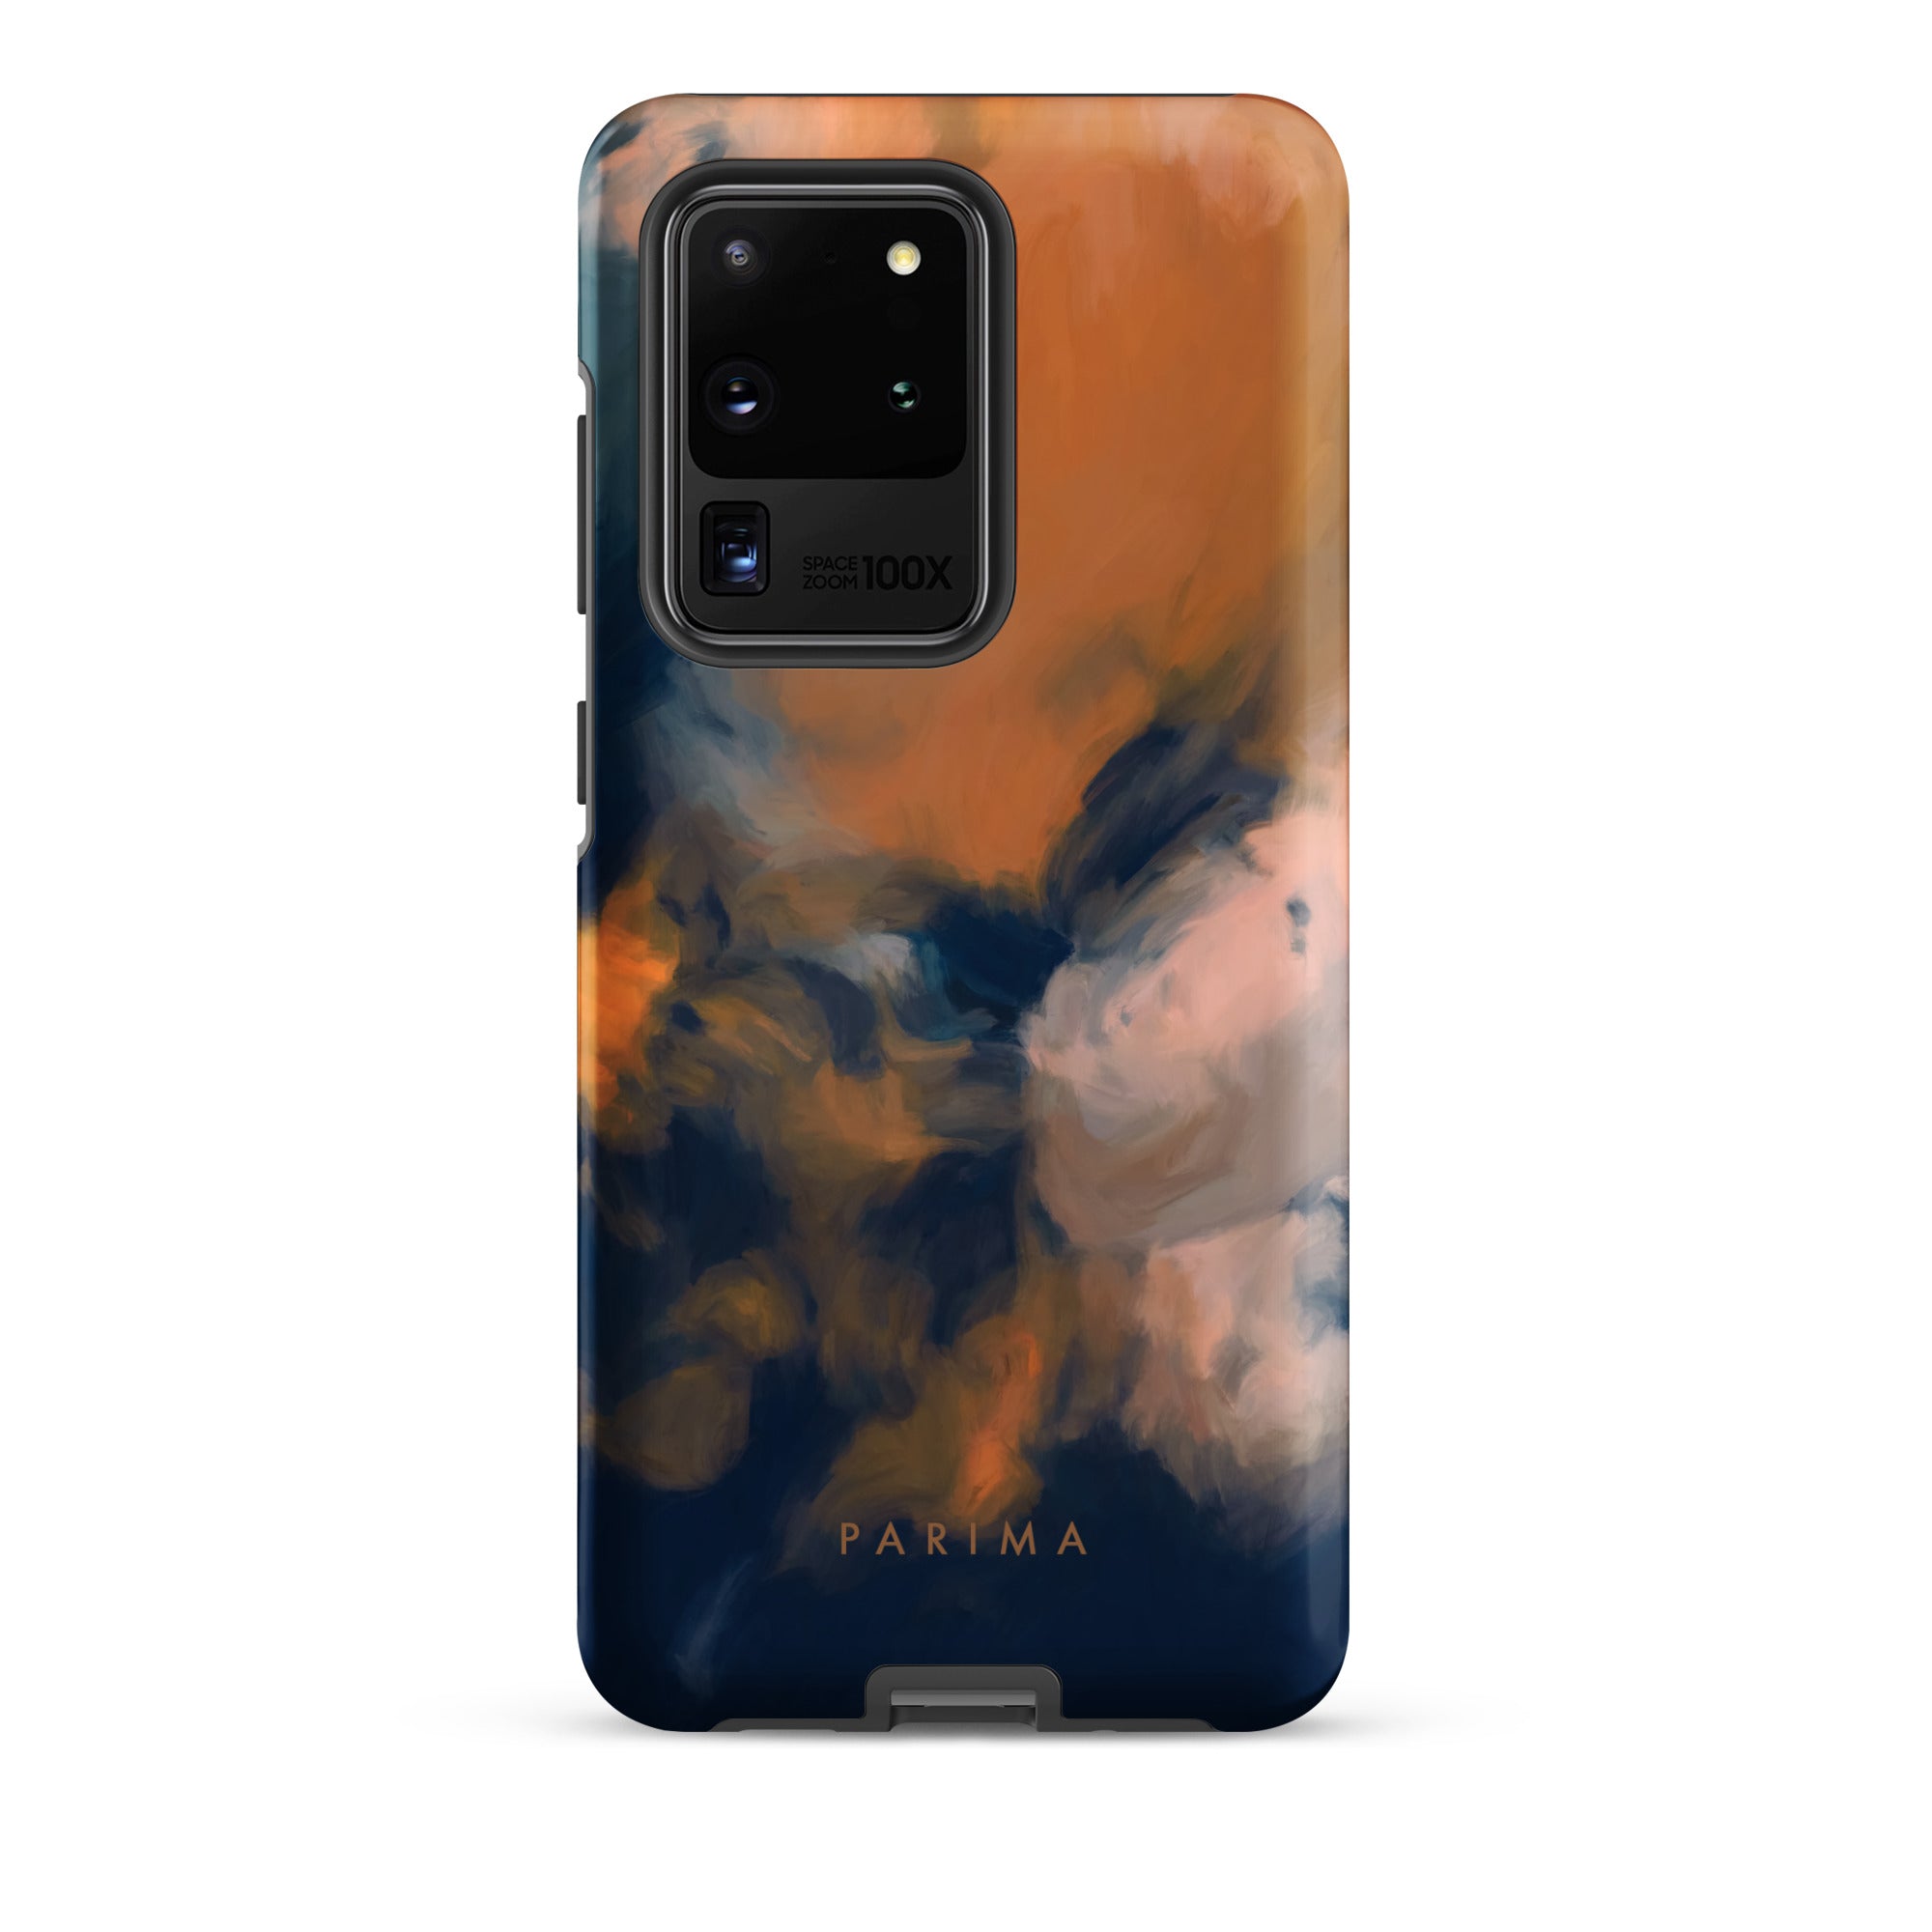 Mia Luna, blue and orange abstract art on Samsung Galaxy S20 Ultra tough case by Parima Studio